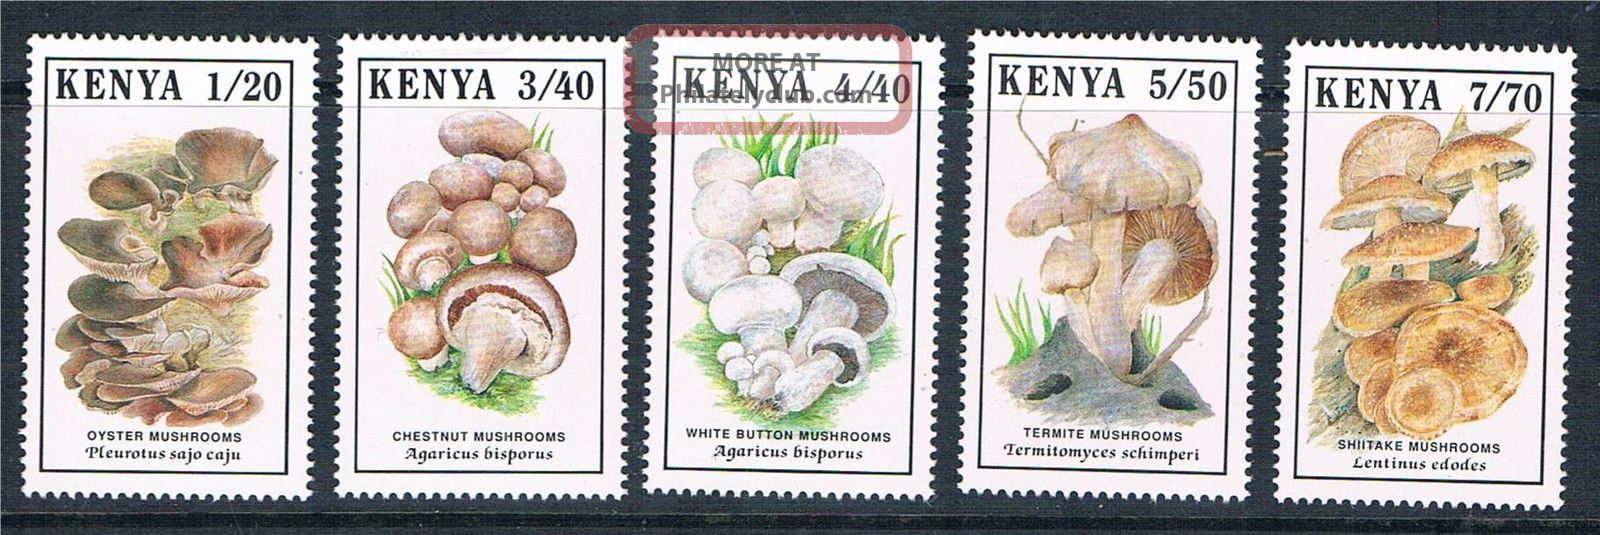 Kenya 1989 Mushrooms Sg 506/10 British Colonies & Territories photo